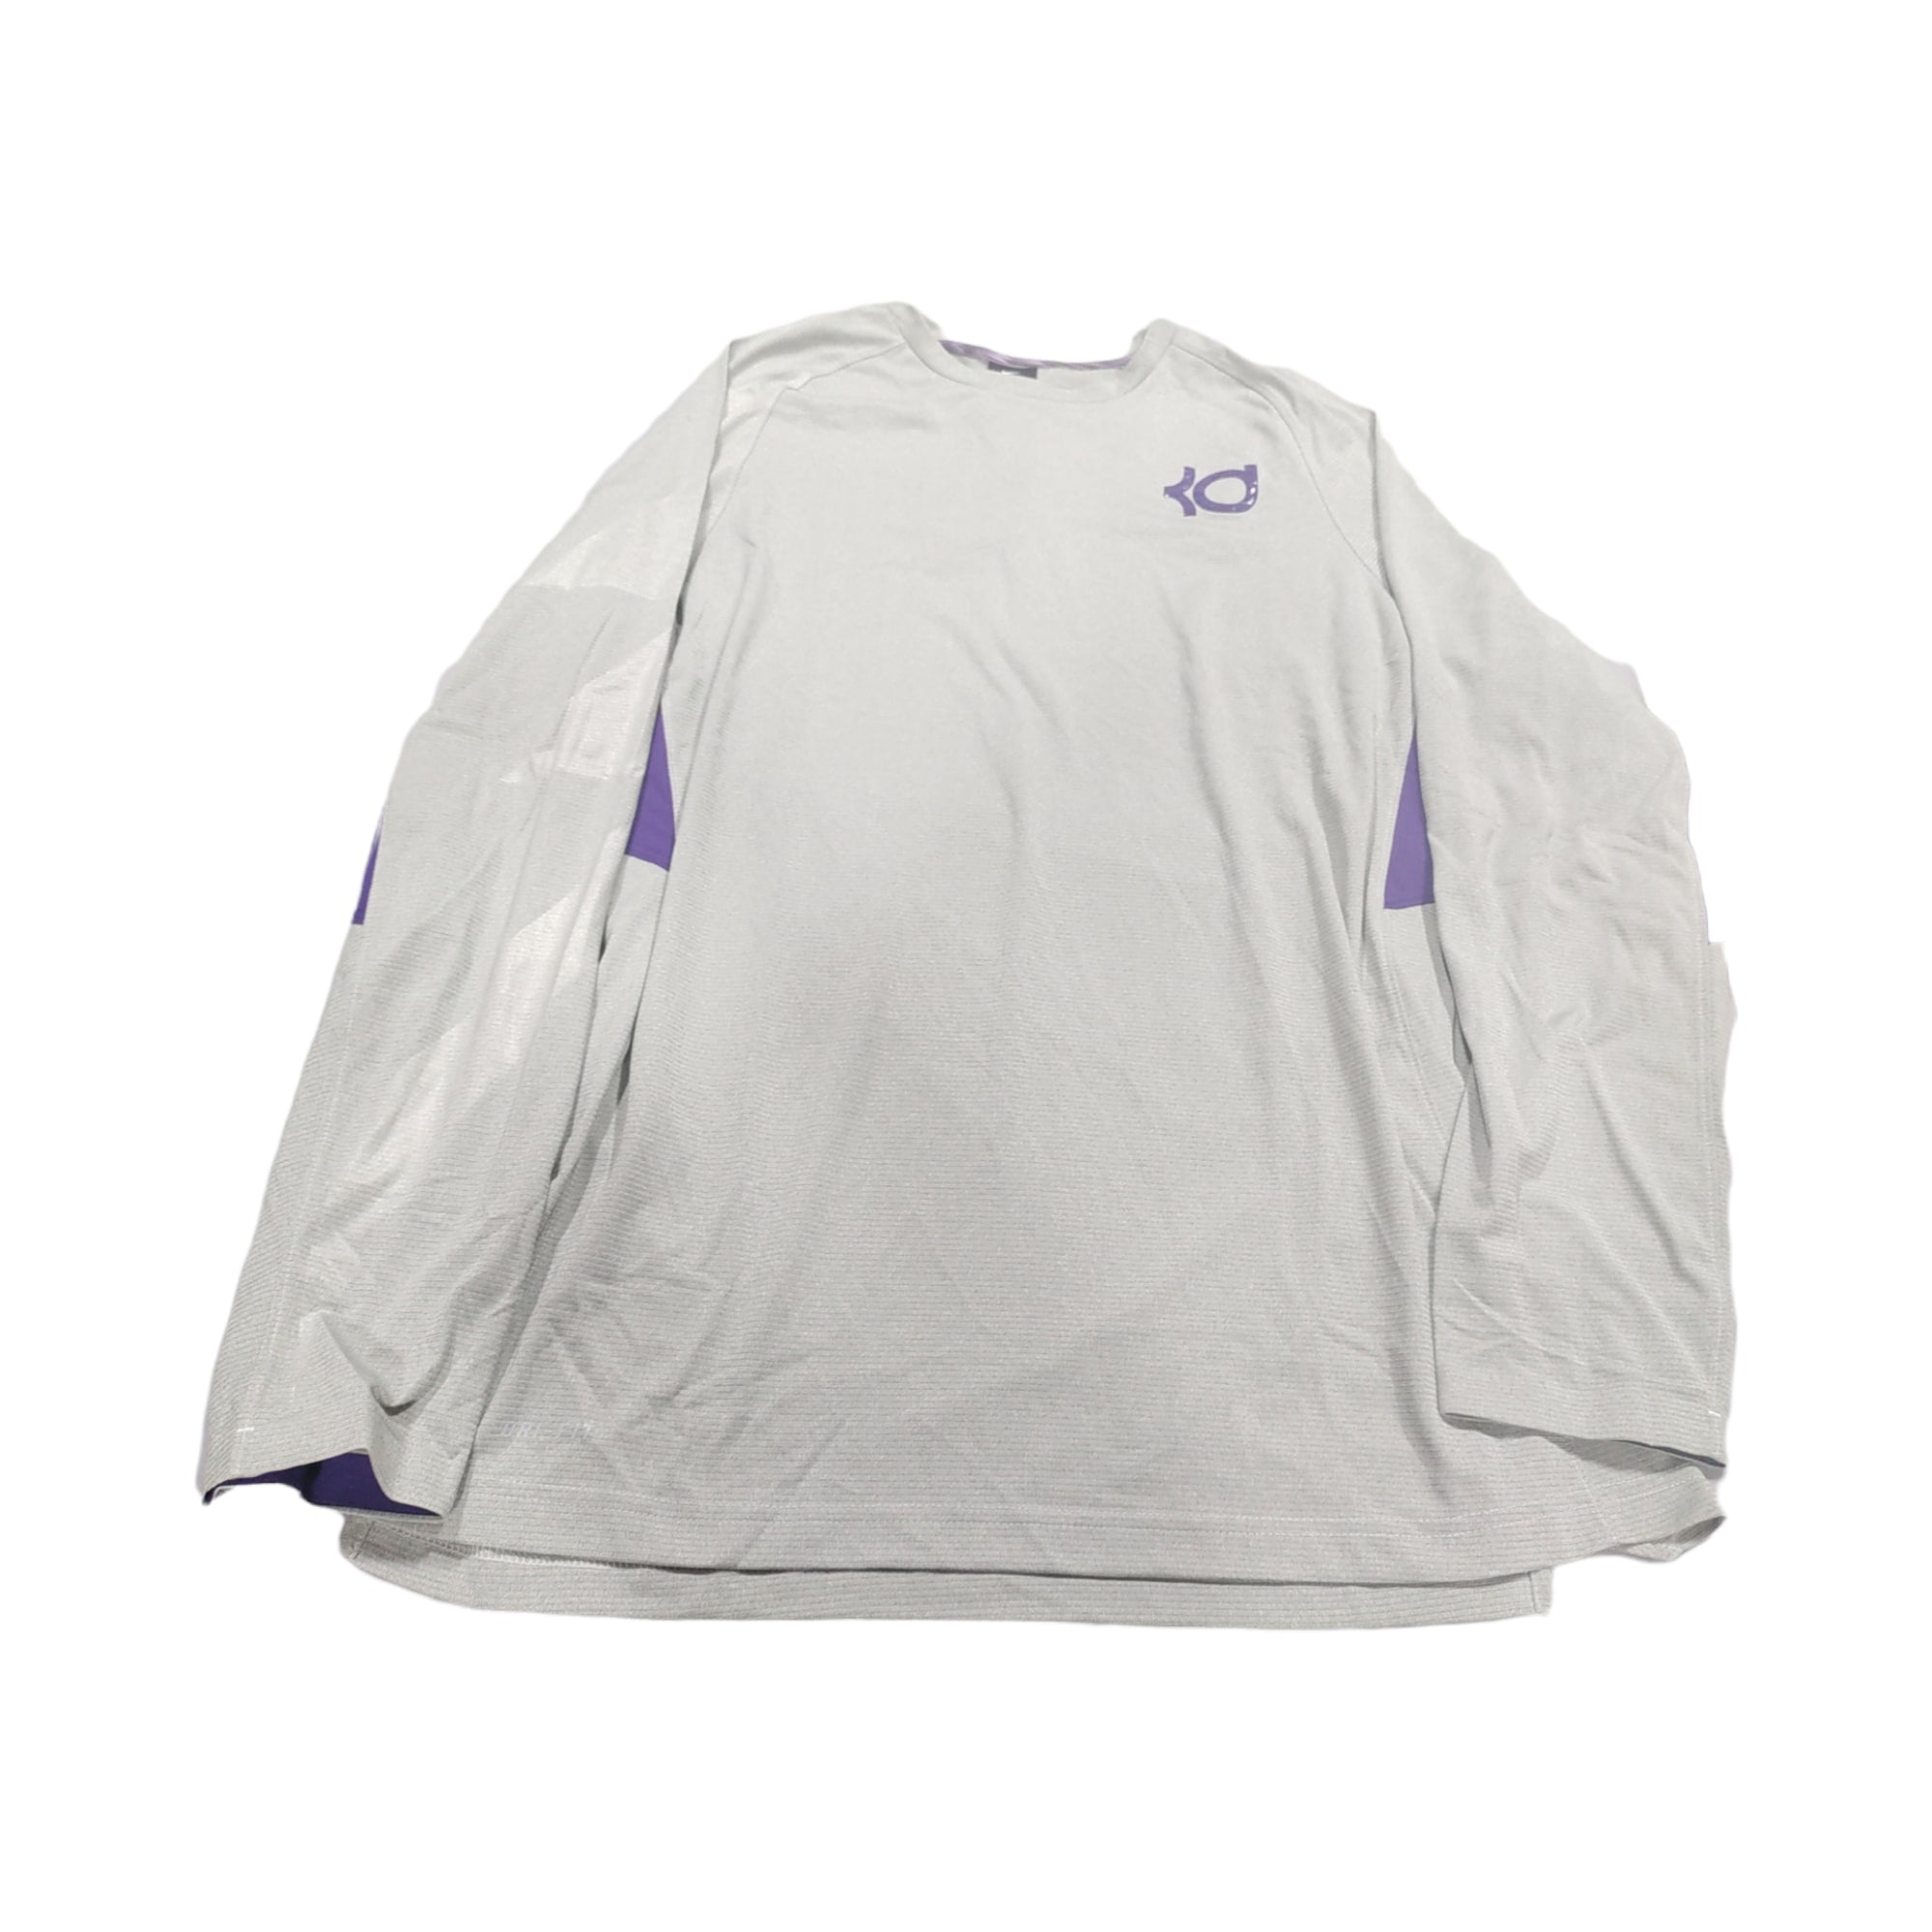 Nike Mens Kevin Durant Kd Klutch Elite Shooter Performance T-Shirt,Grey Pruple,X-Large